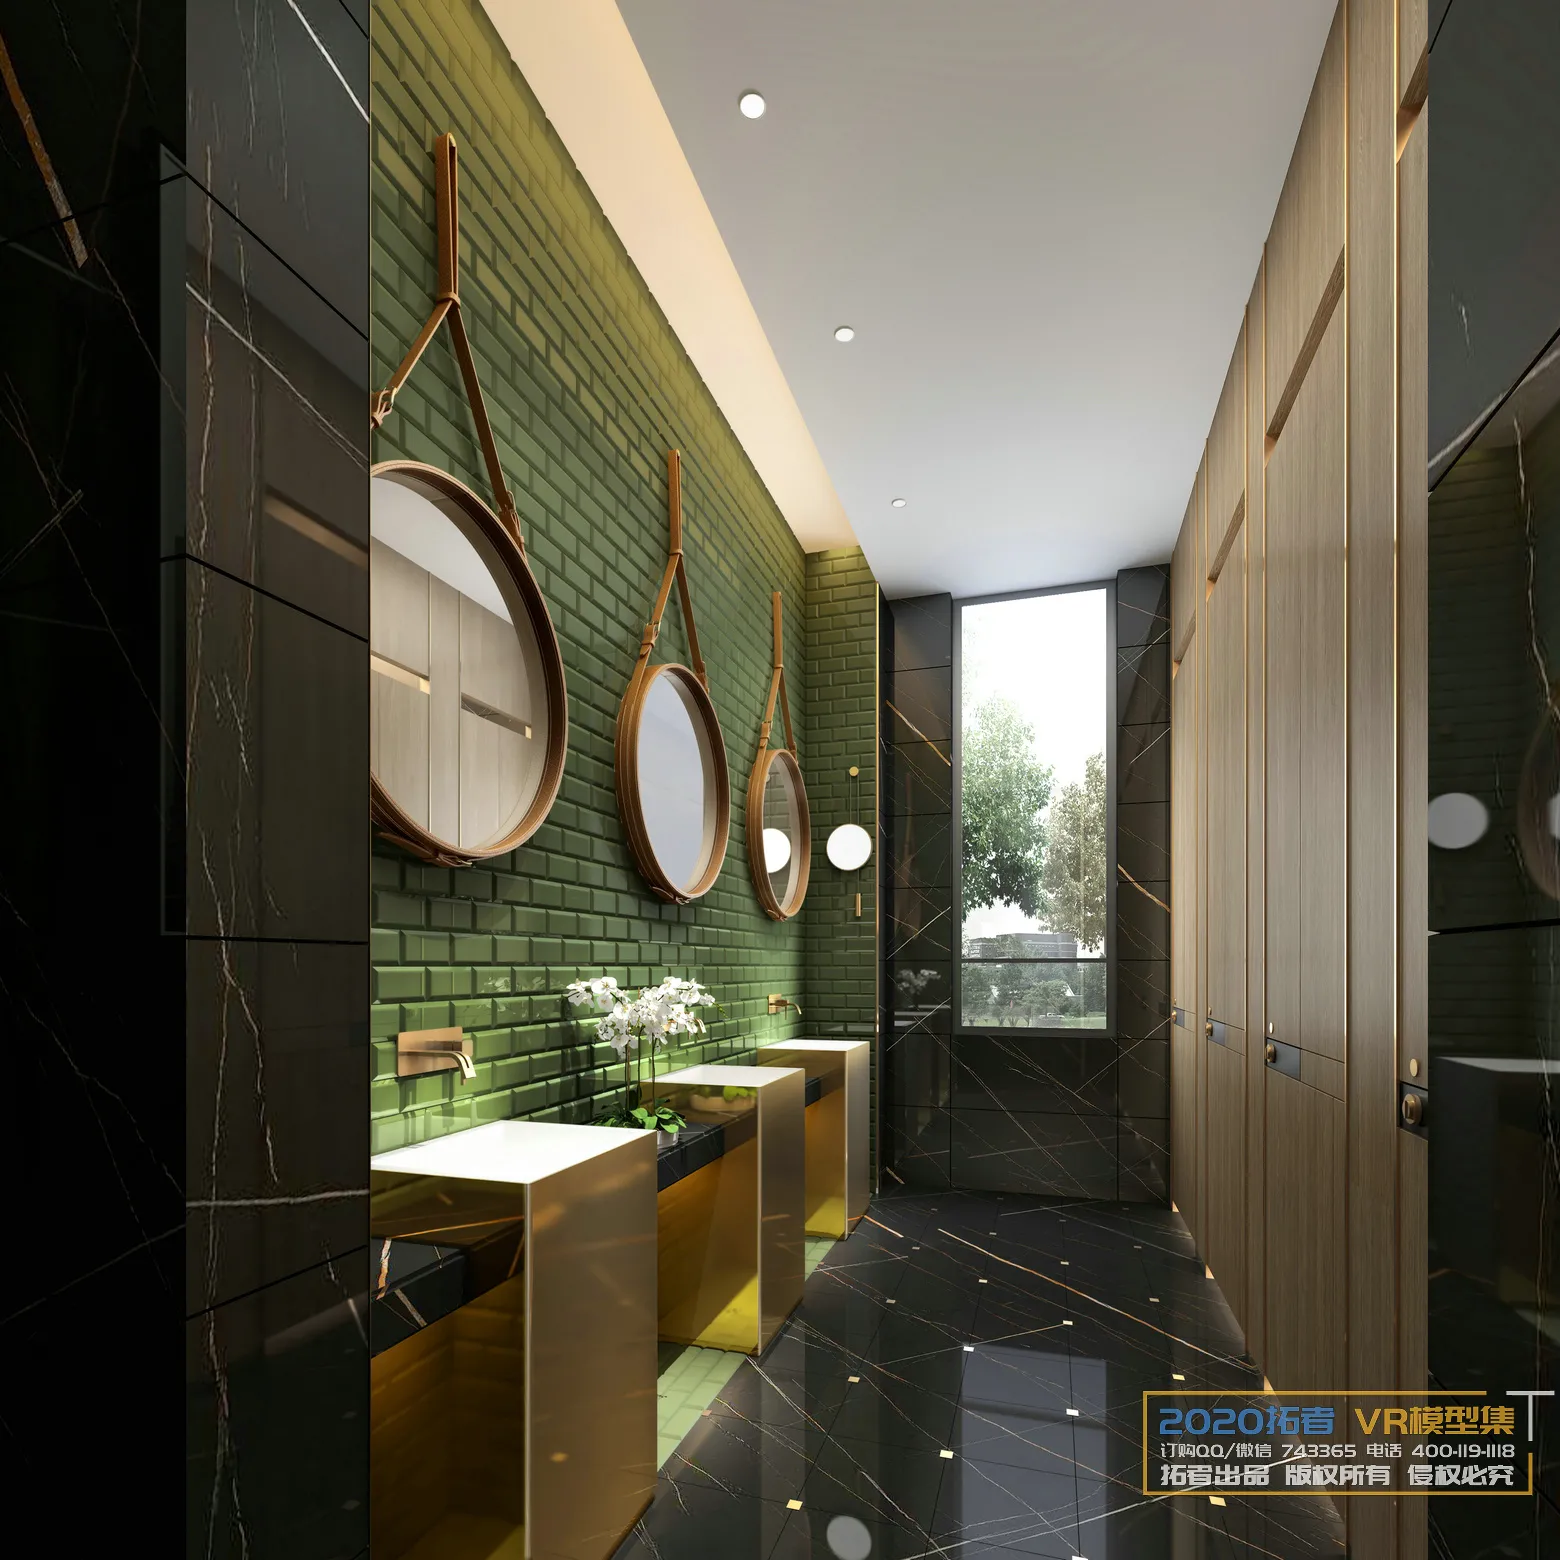 Extension Interior 20 – BATHROOM & WATER CLOSED – 7